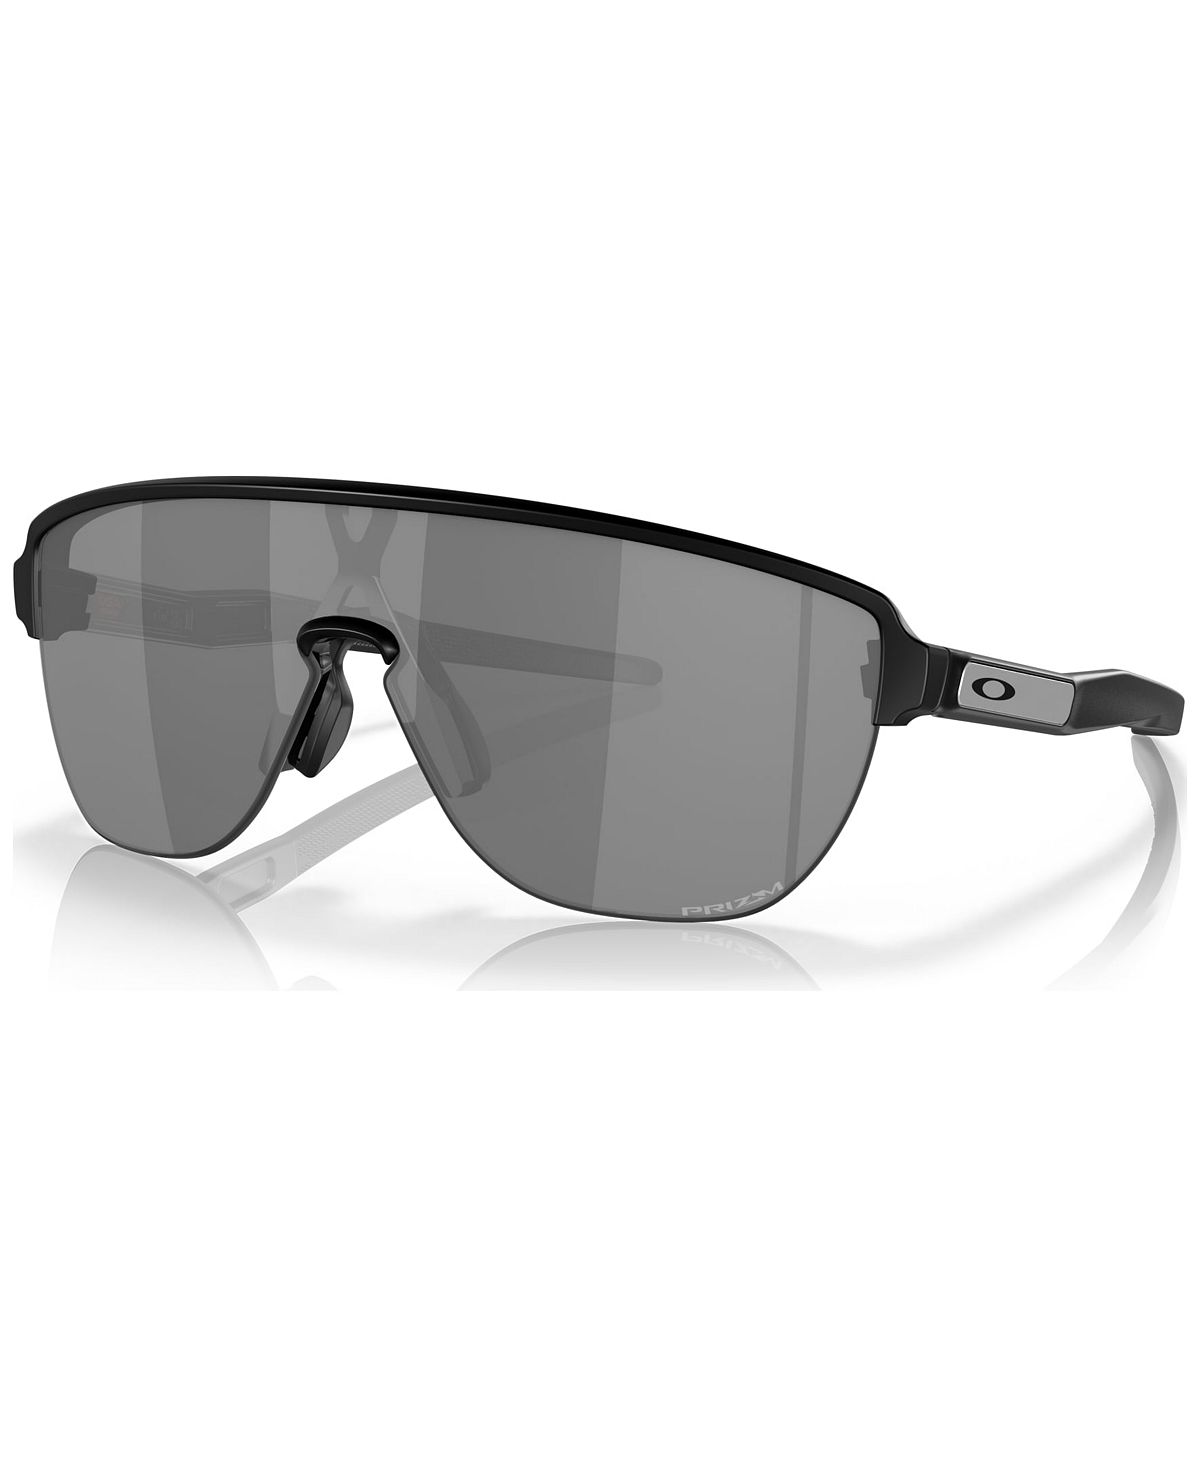 Мужские солнцезащитные очки для коридора, OO9248 Oakley pfi 303mbk matte black 330 мл 2957b001